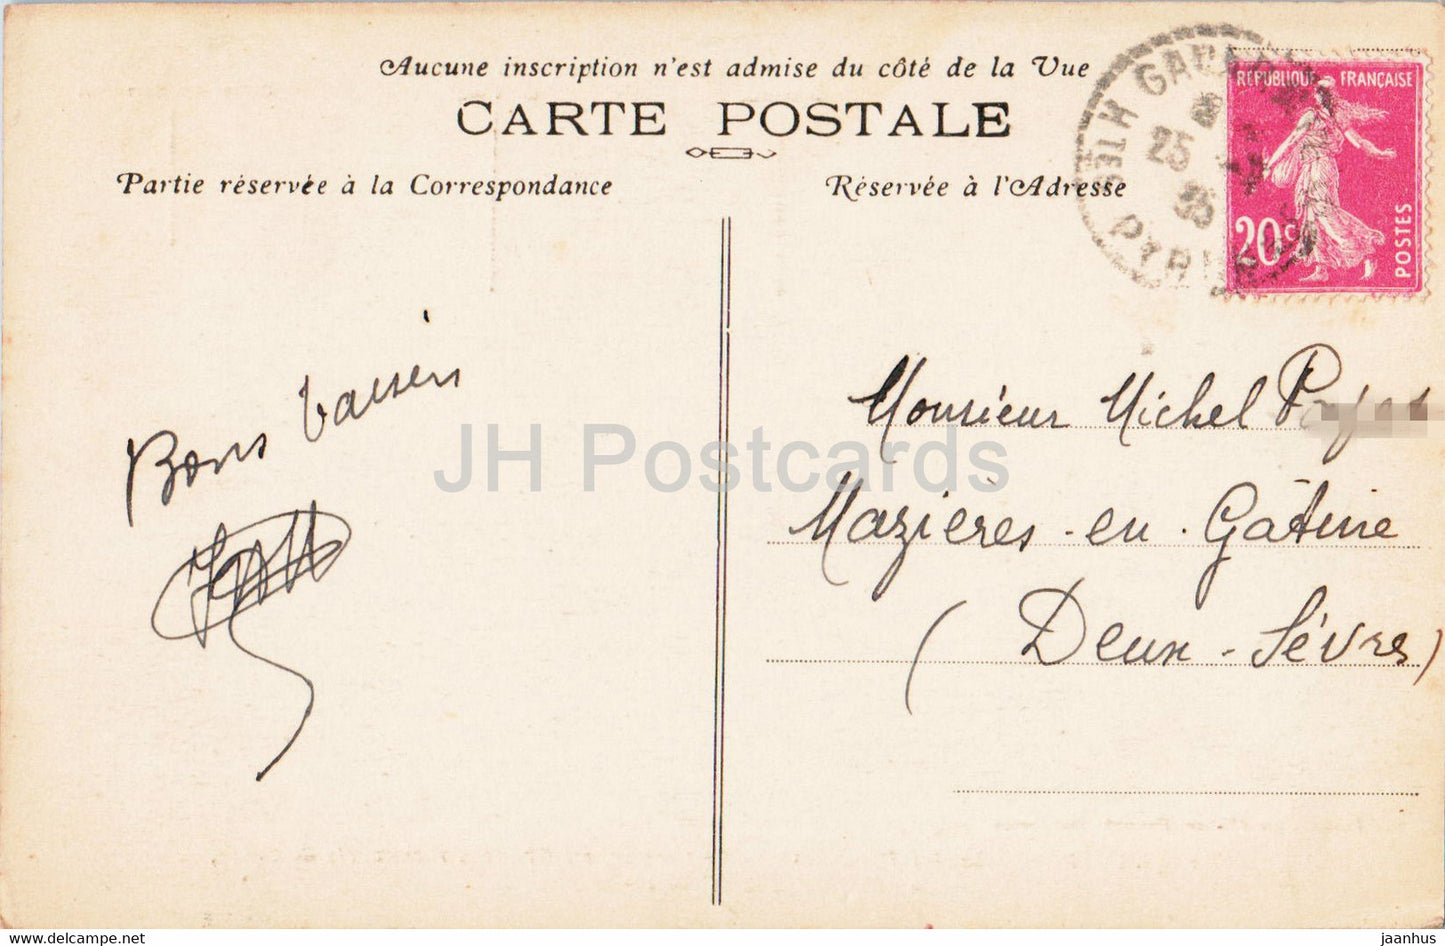 Gavarnie - Le Cirque ses Gradins recouverts de neige sa Cascade - 4 - old postcard - 1935 - France - used